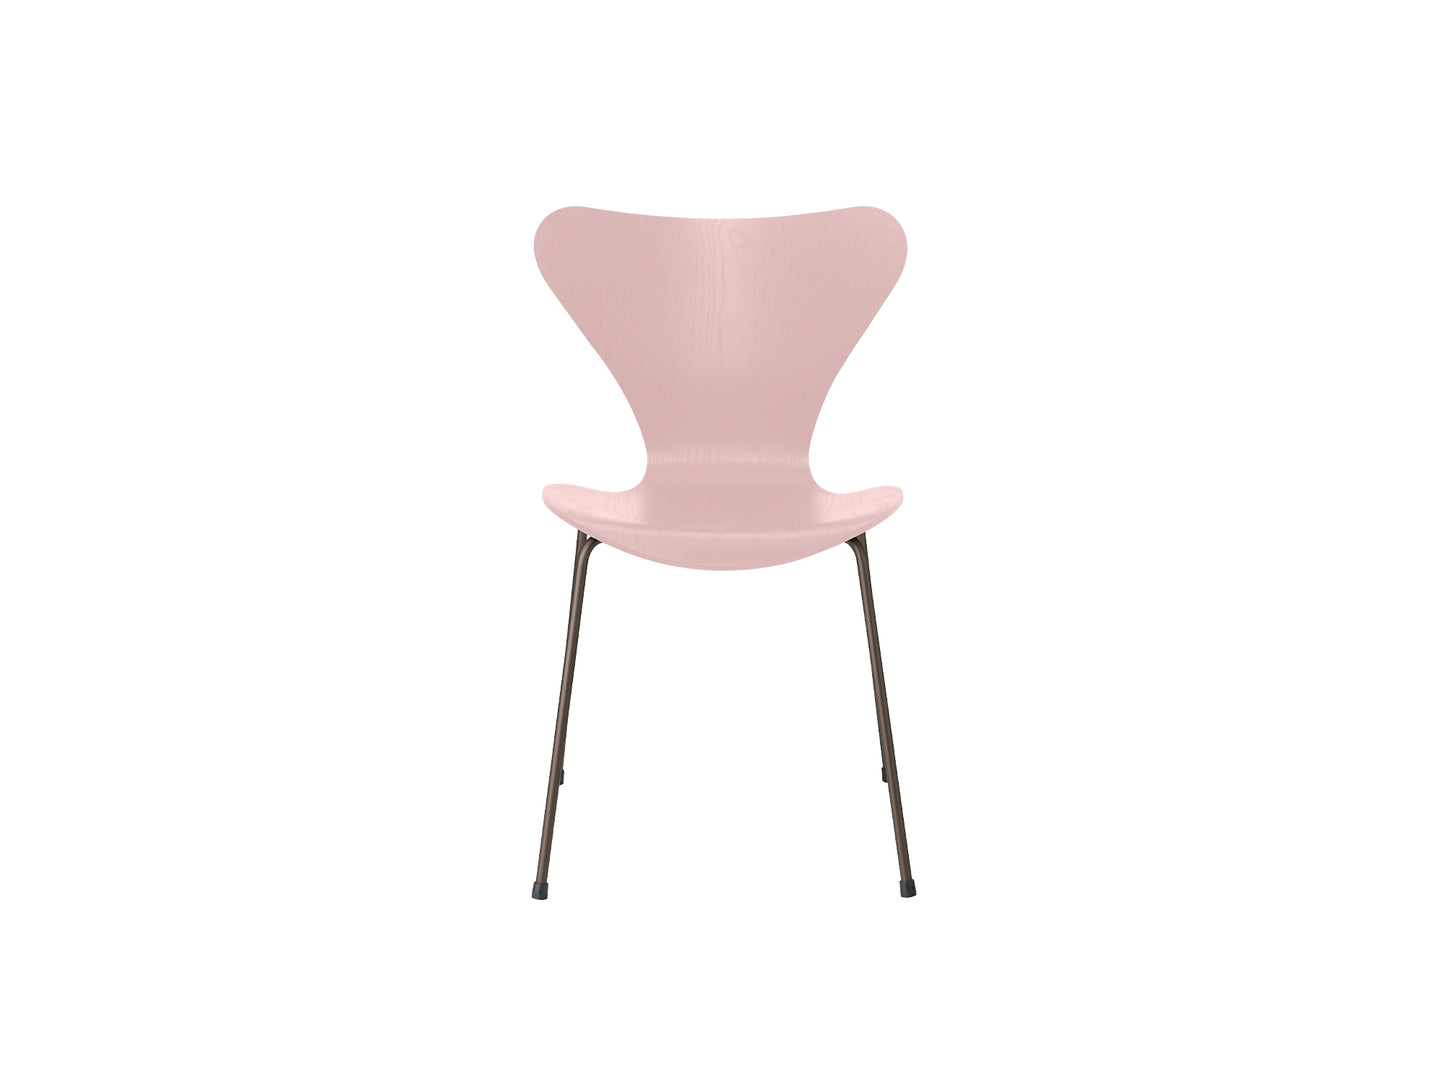 Series 7™ 3107 Dining Chair by Fritz Hansen - Pale Rose Coloured Ash Veneer Shell / Brown Bronze Steel